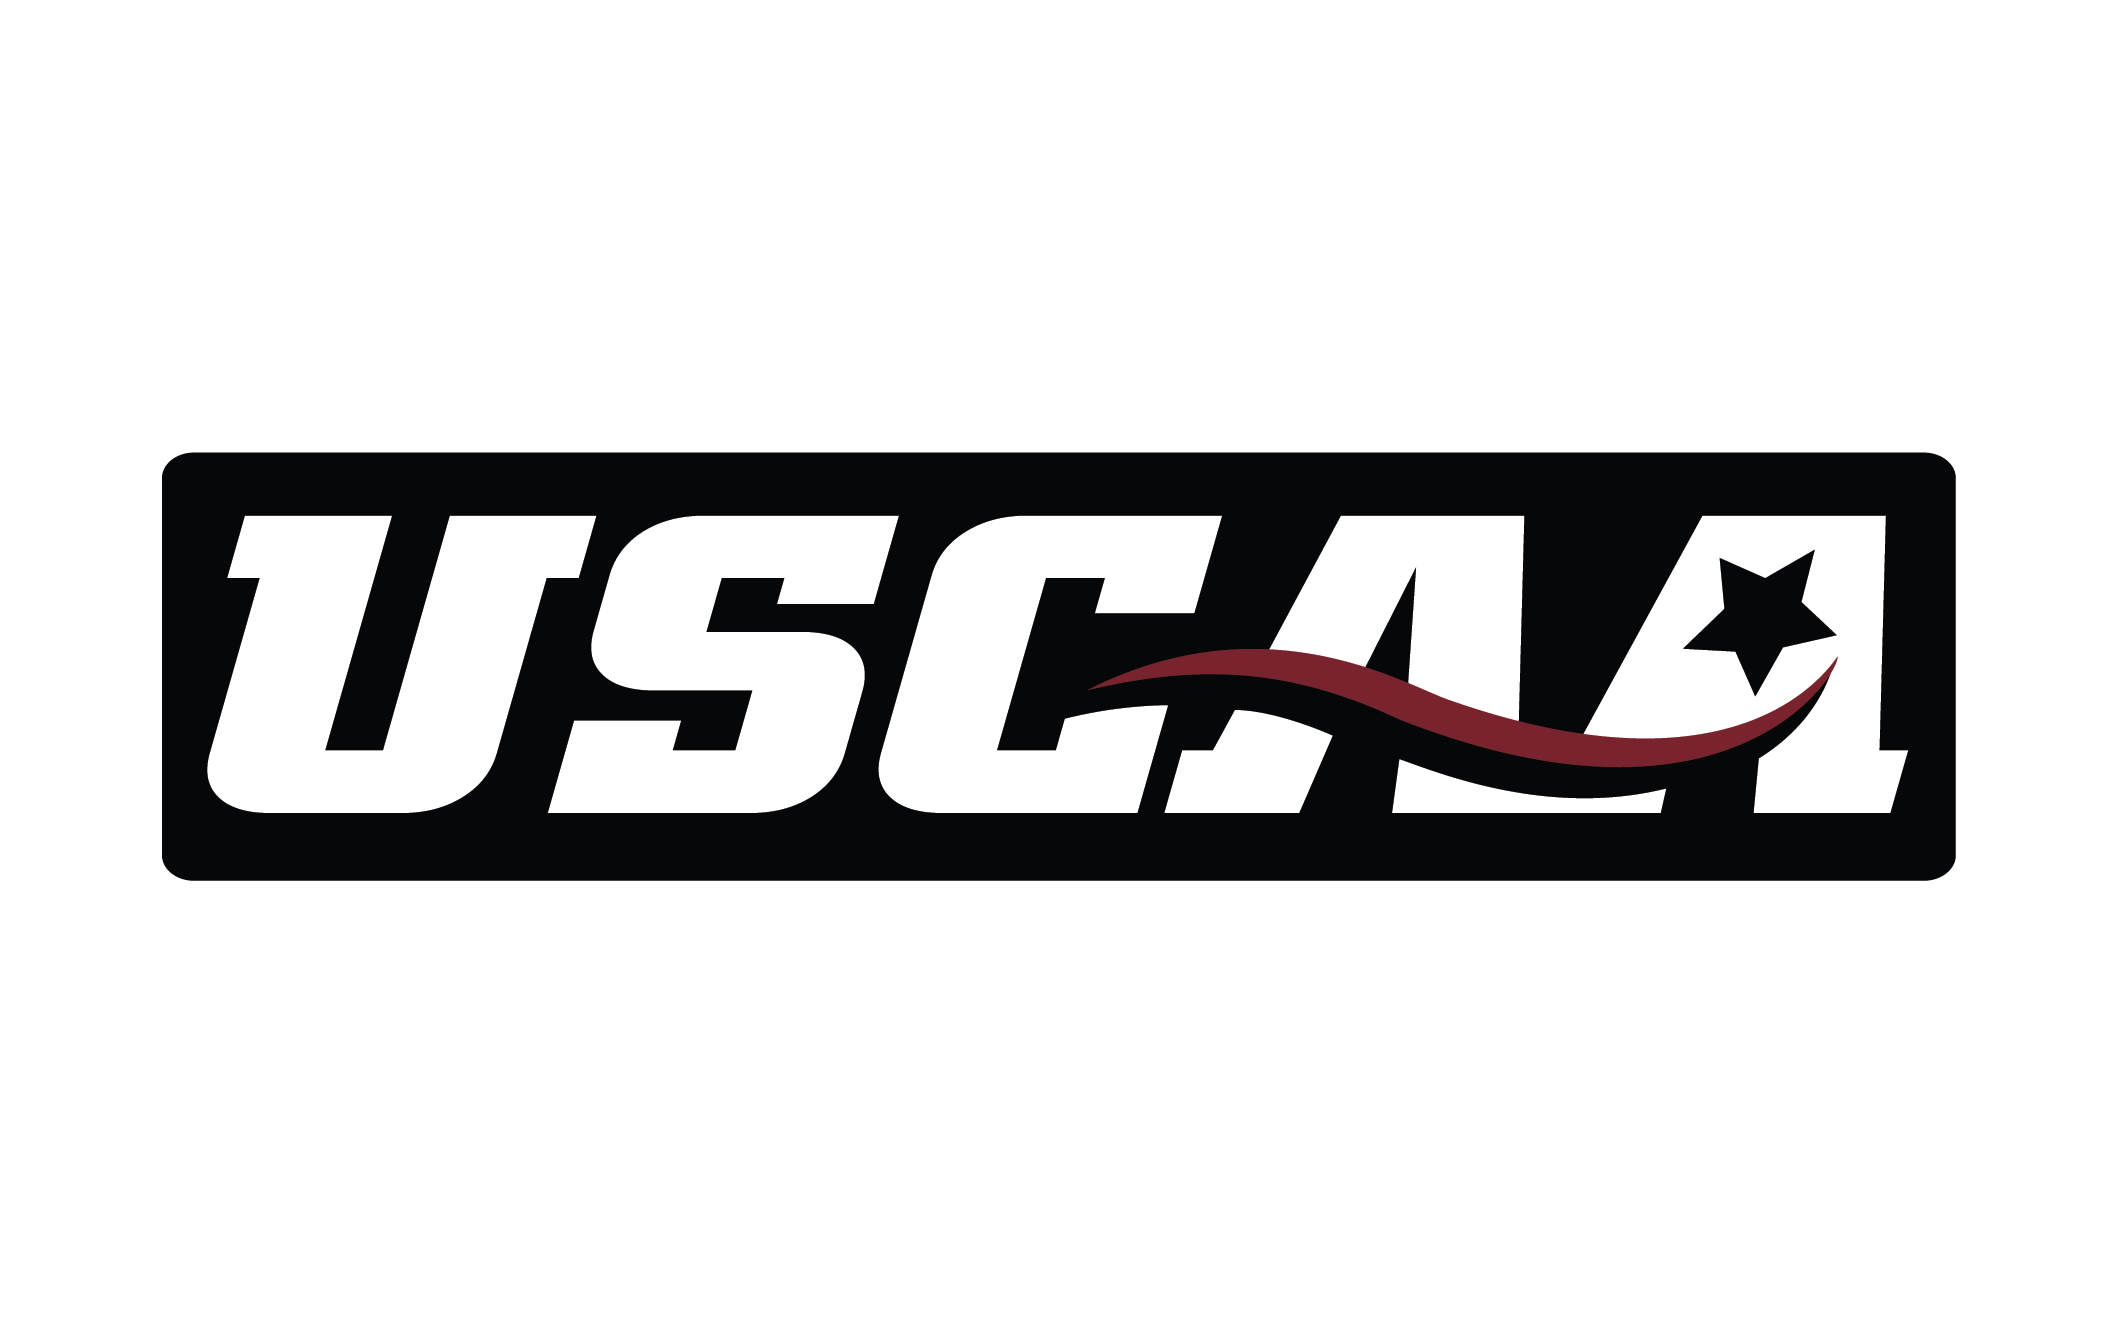 website_logos-uscaa